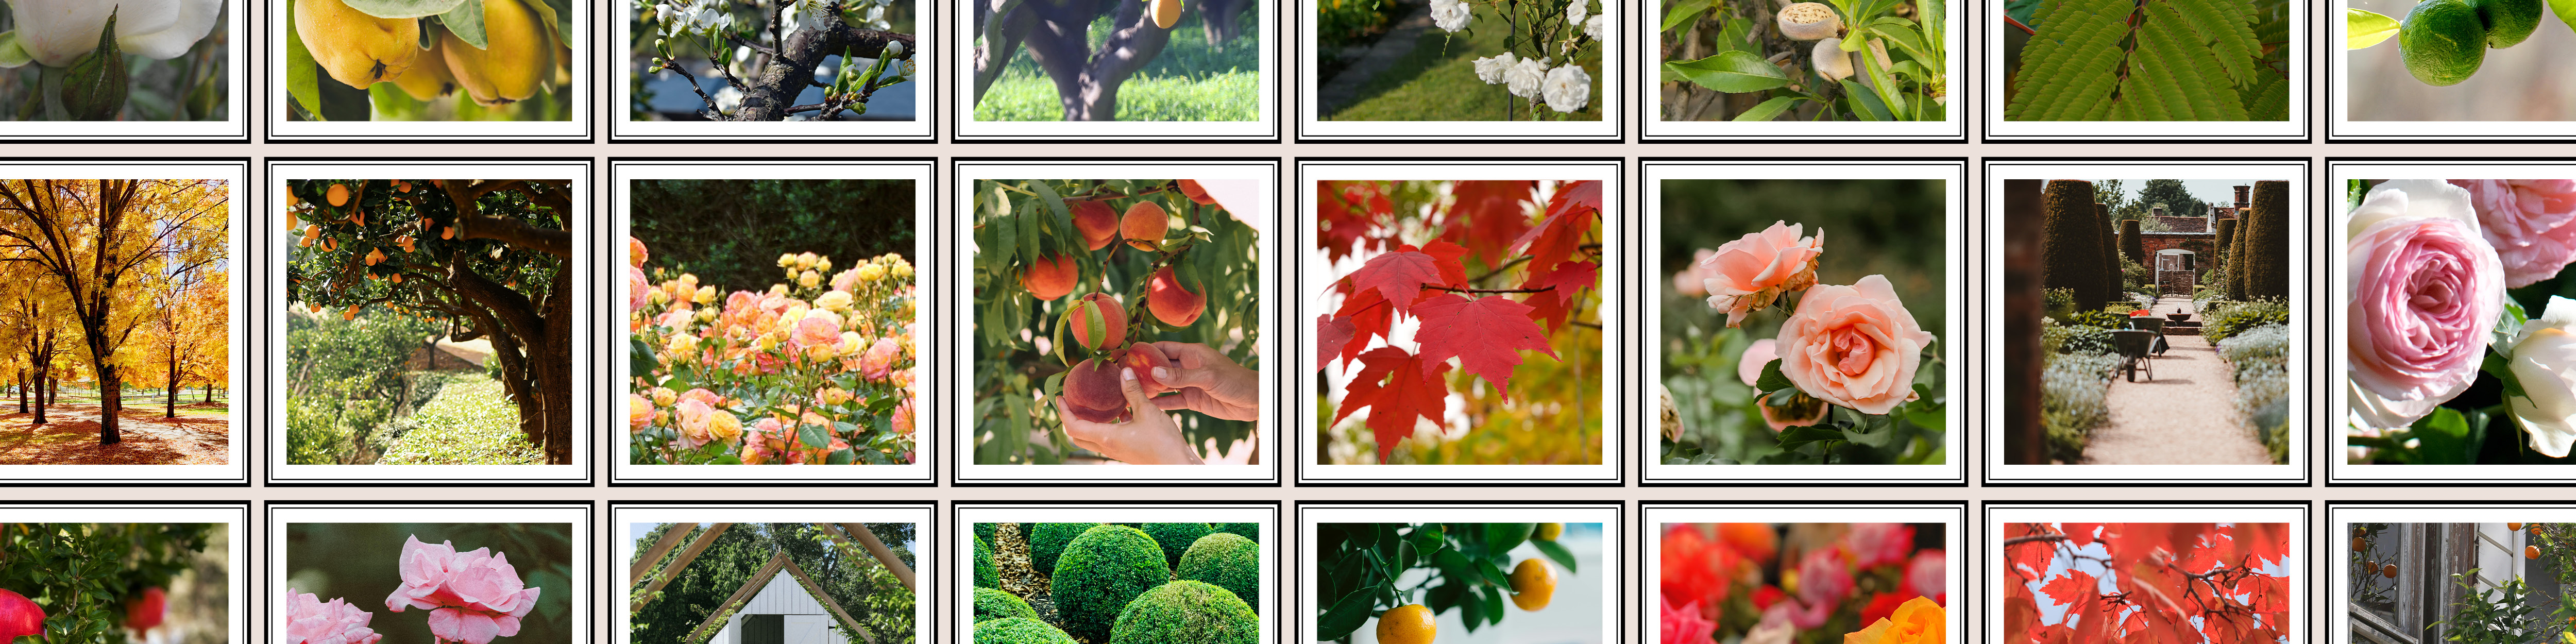 Fruit & Citrus Trees, Ornamentals and Roses